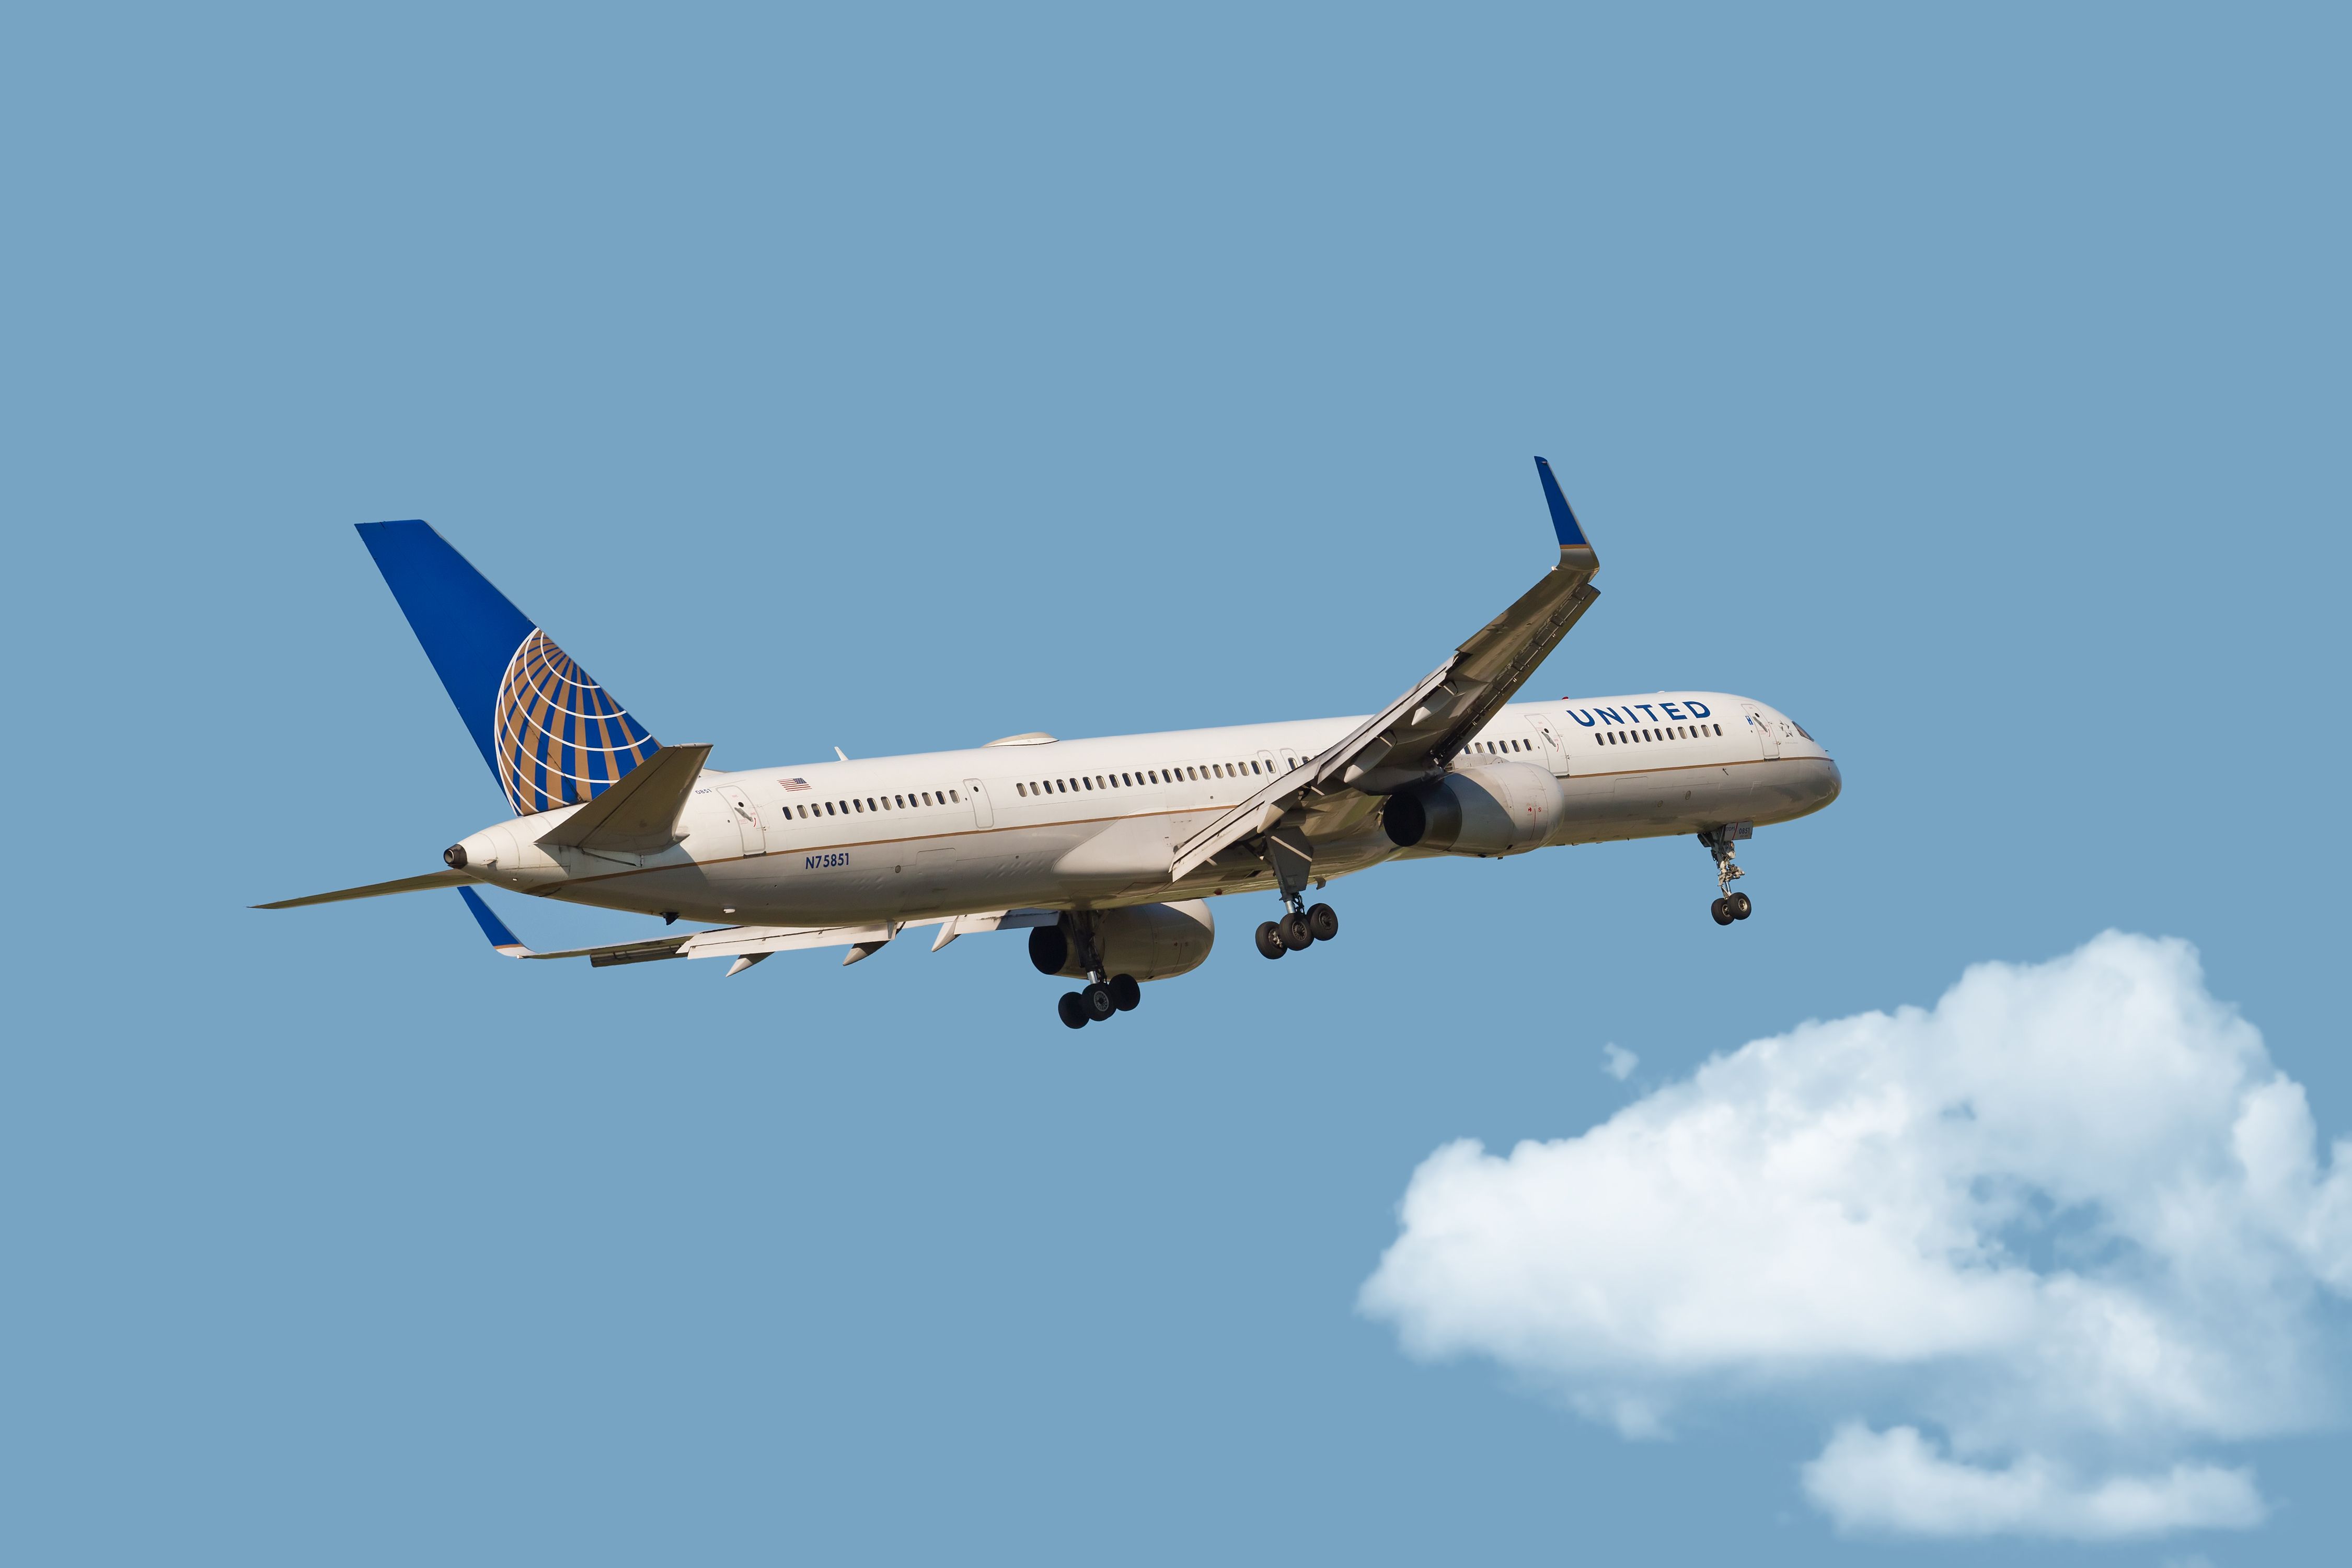 United 757-300